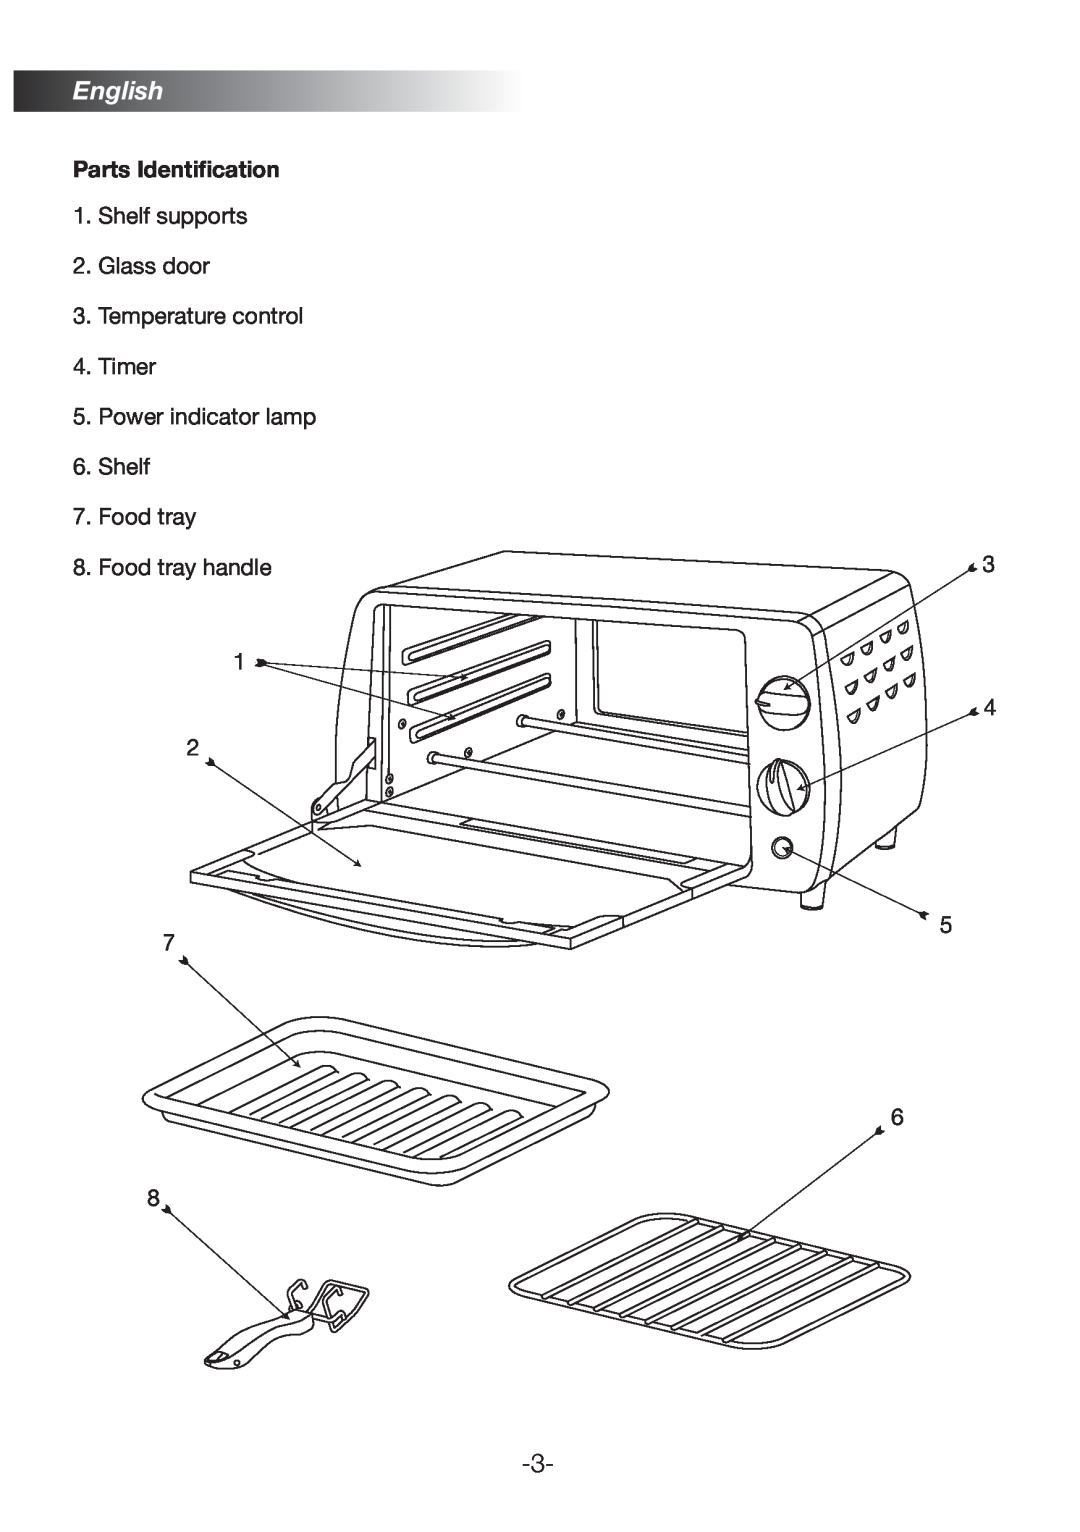 Black & Decker TRO1000 manual English, Parts Identification, Shelf supports 2.Glass door, Temperature control 4.Timer 